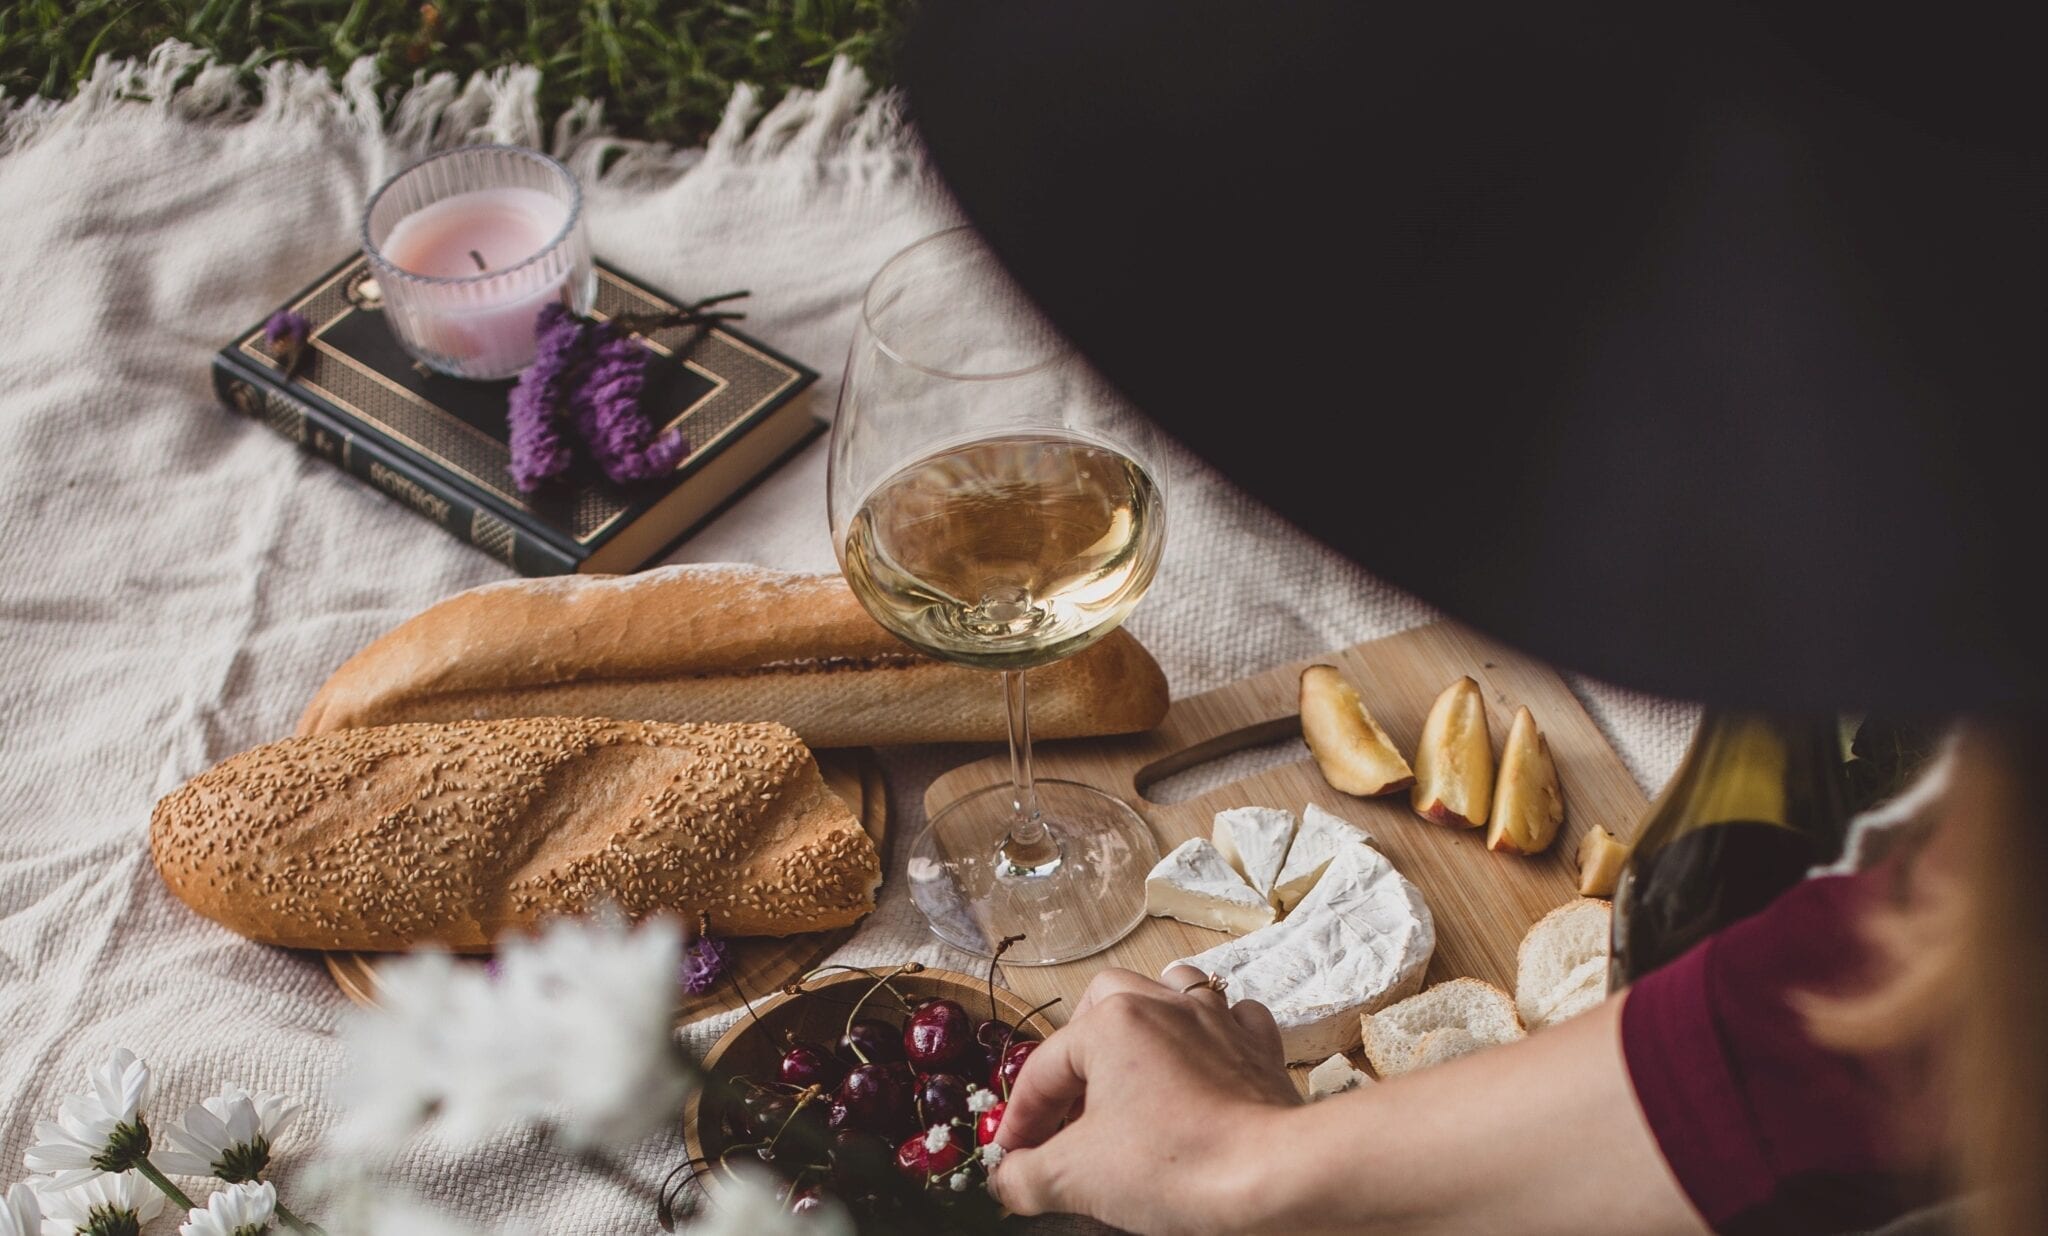 Wine picnic, reading, cheese, pairings. By Alexandra K, Unsplash